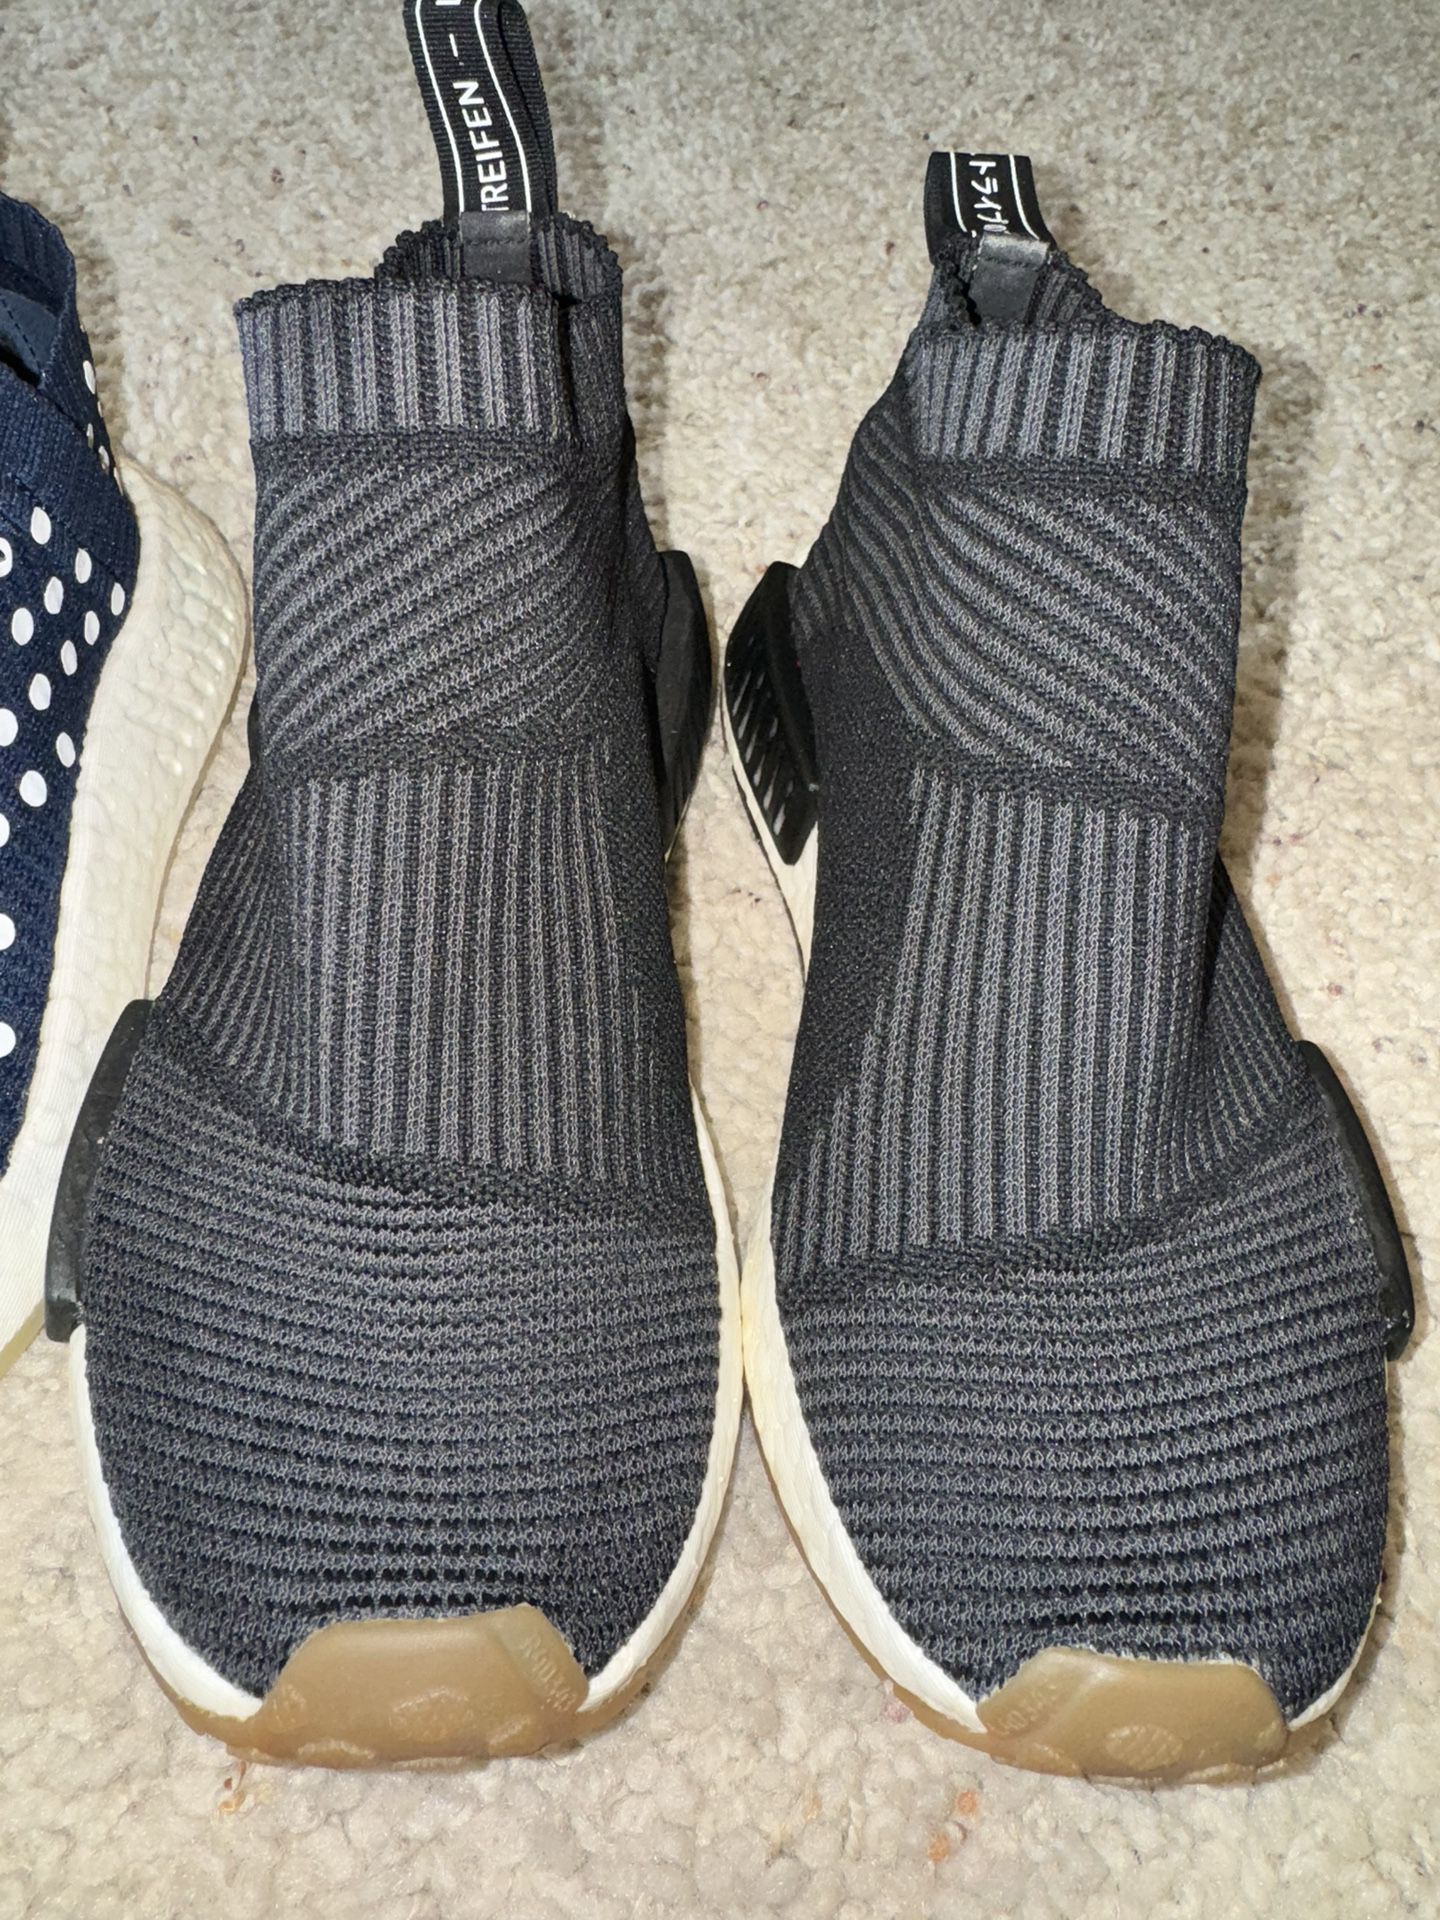 Adidas Nmd Size 6 City Sock 